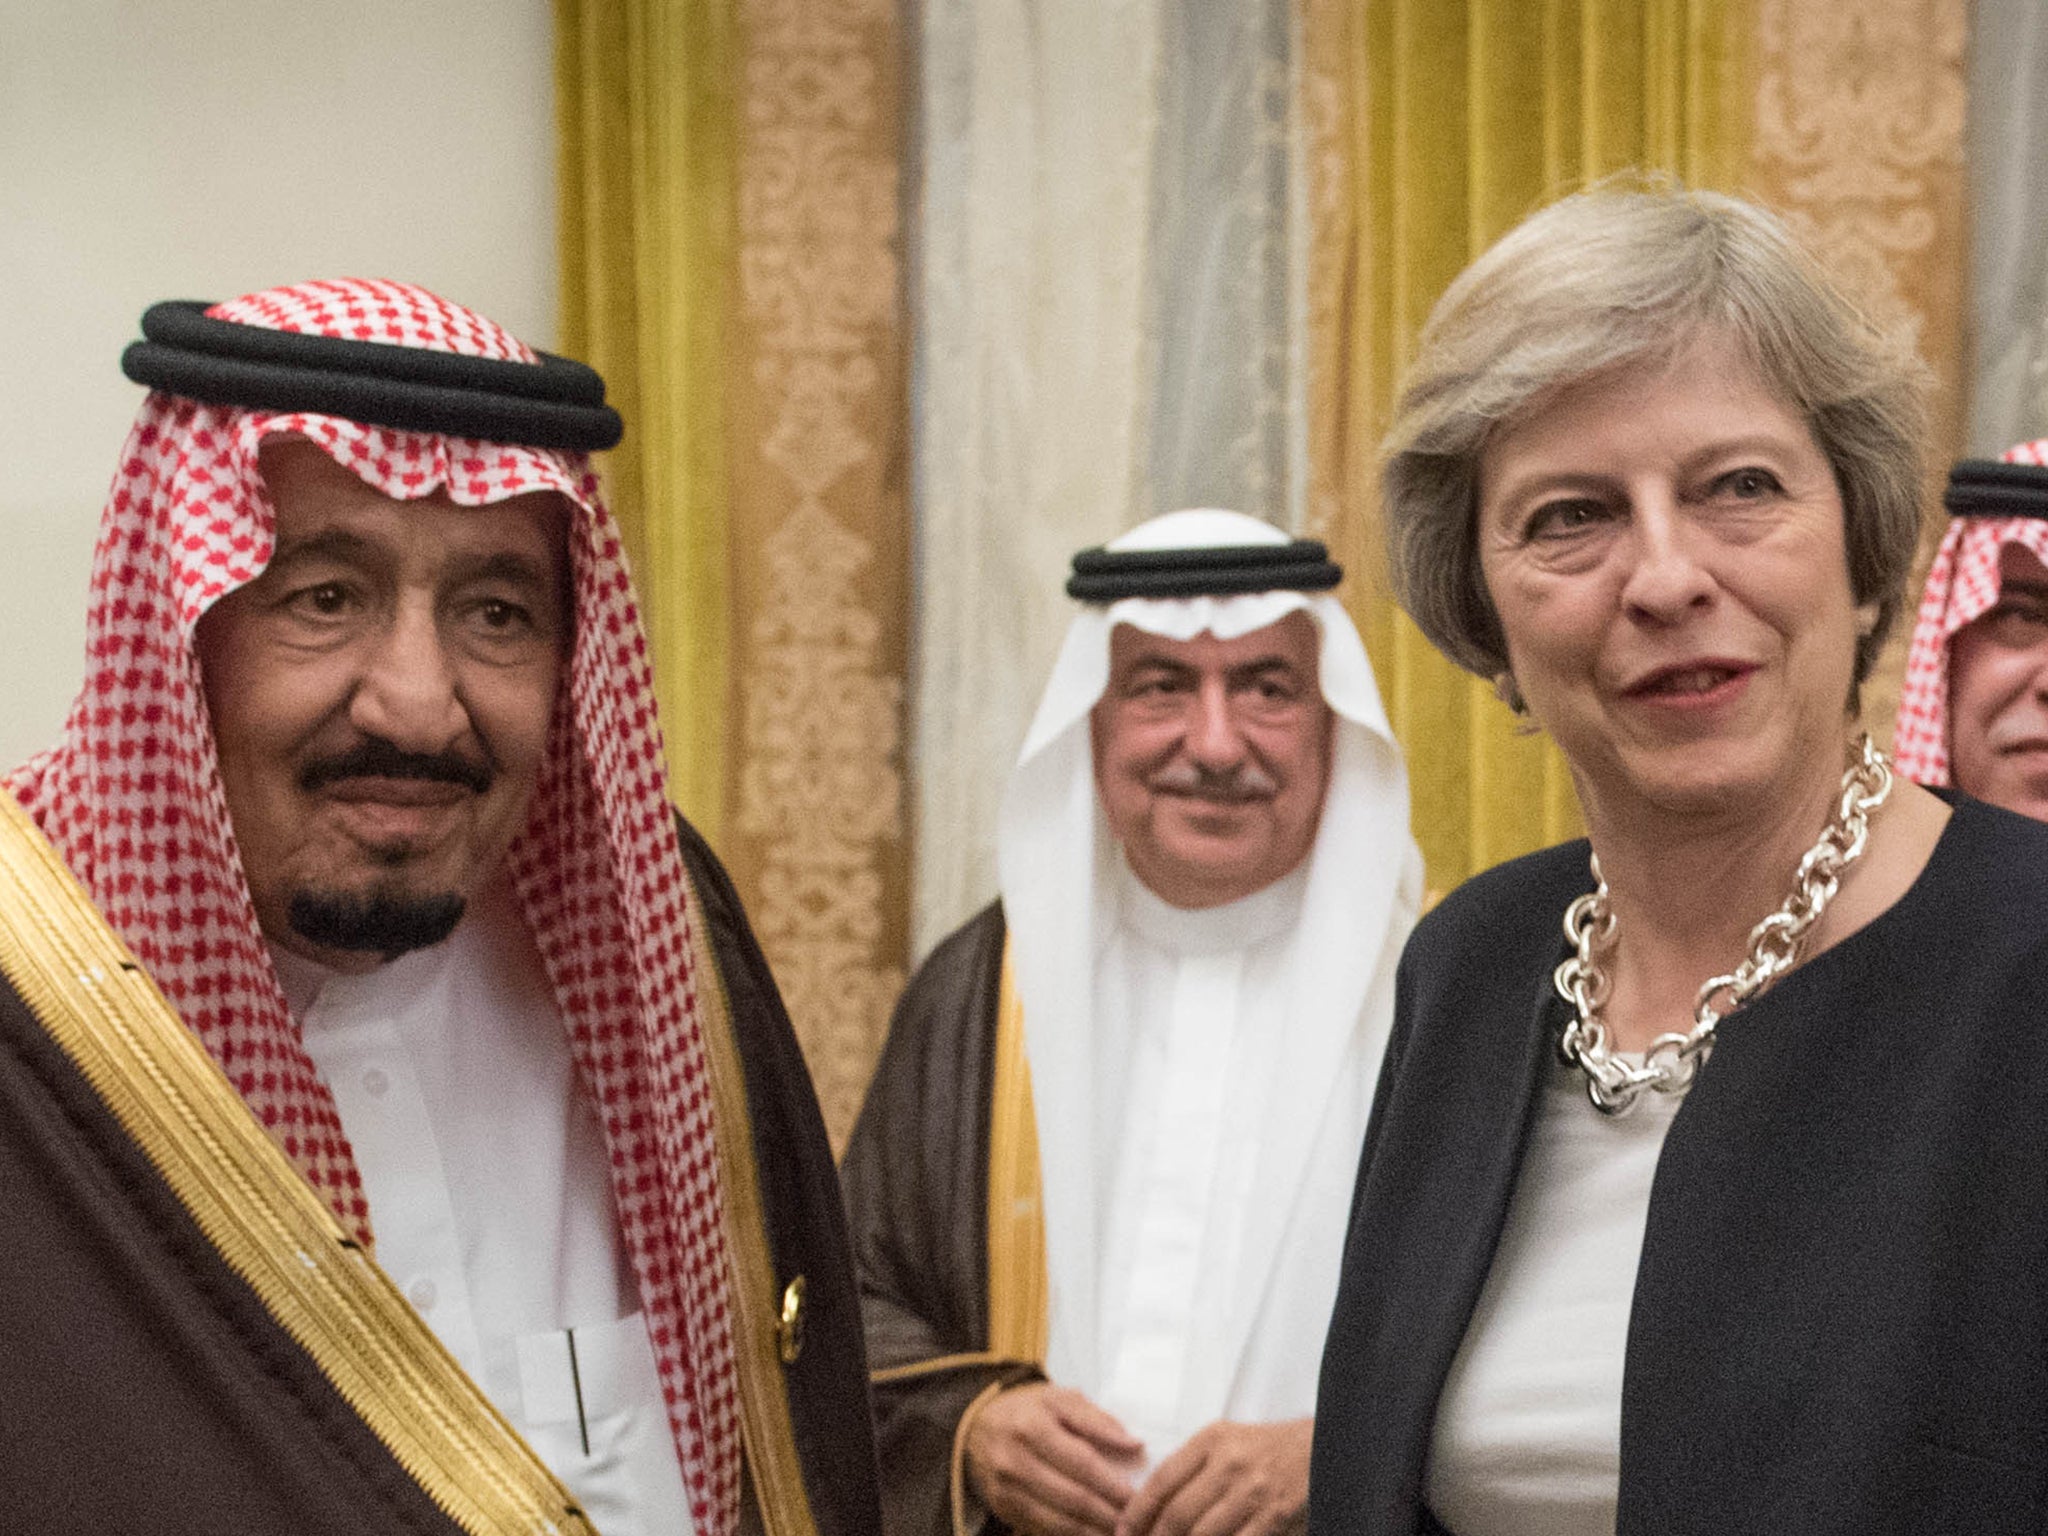 Prime Minister Theresa May meets King Salman bin Abdulaziz al Saud of Saudi Arabia in December 2016